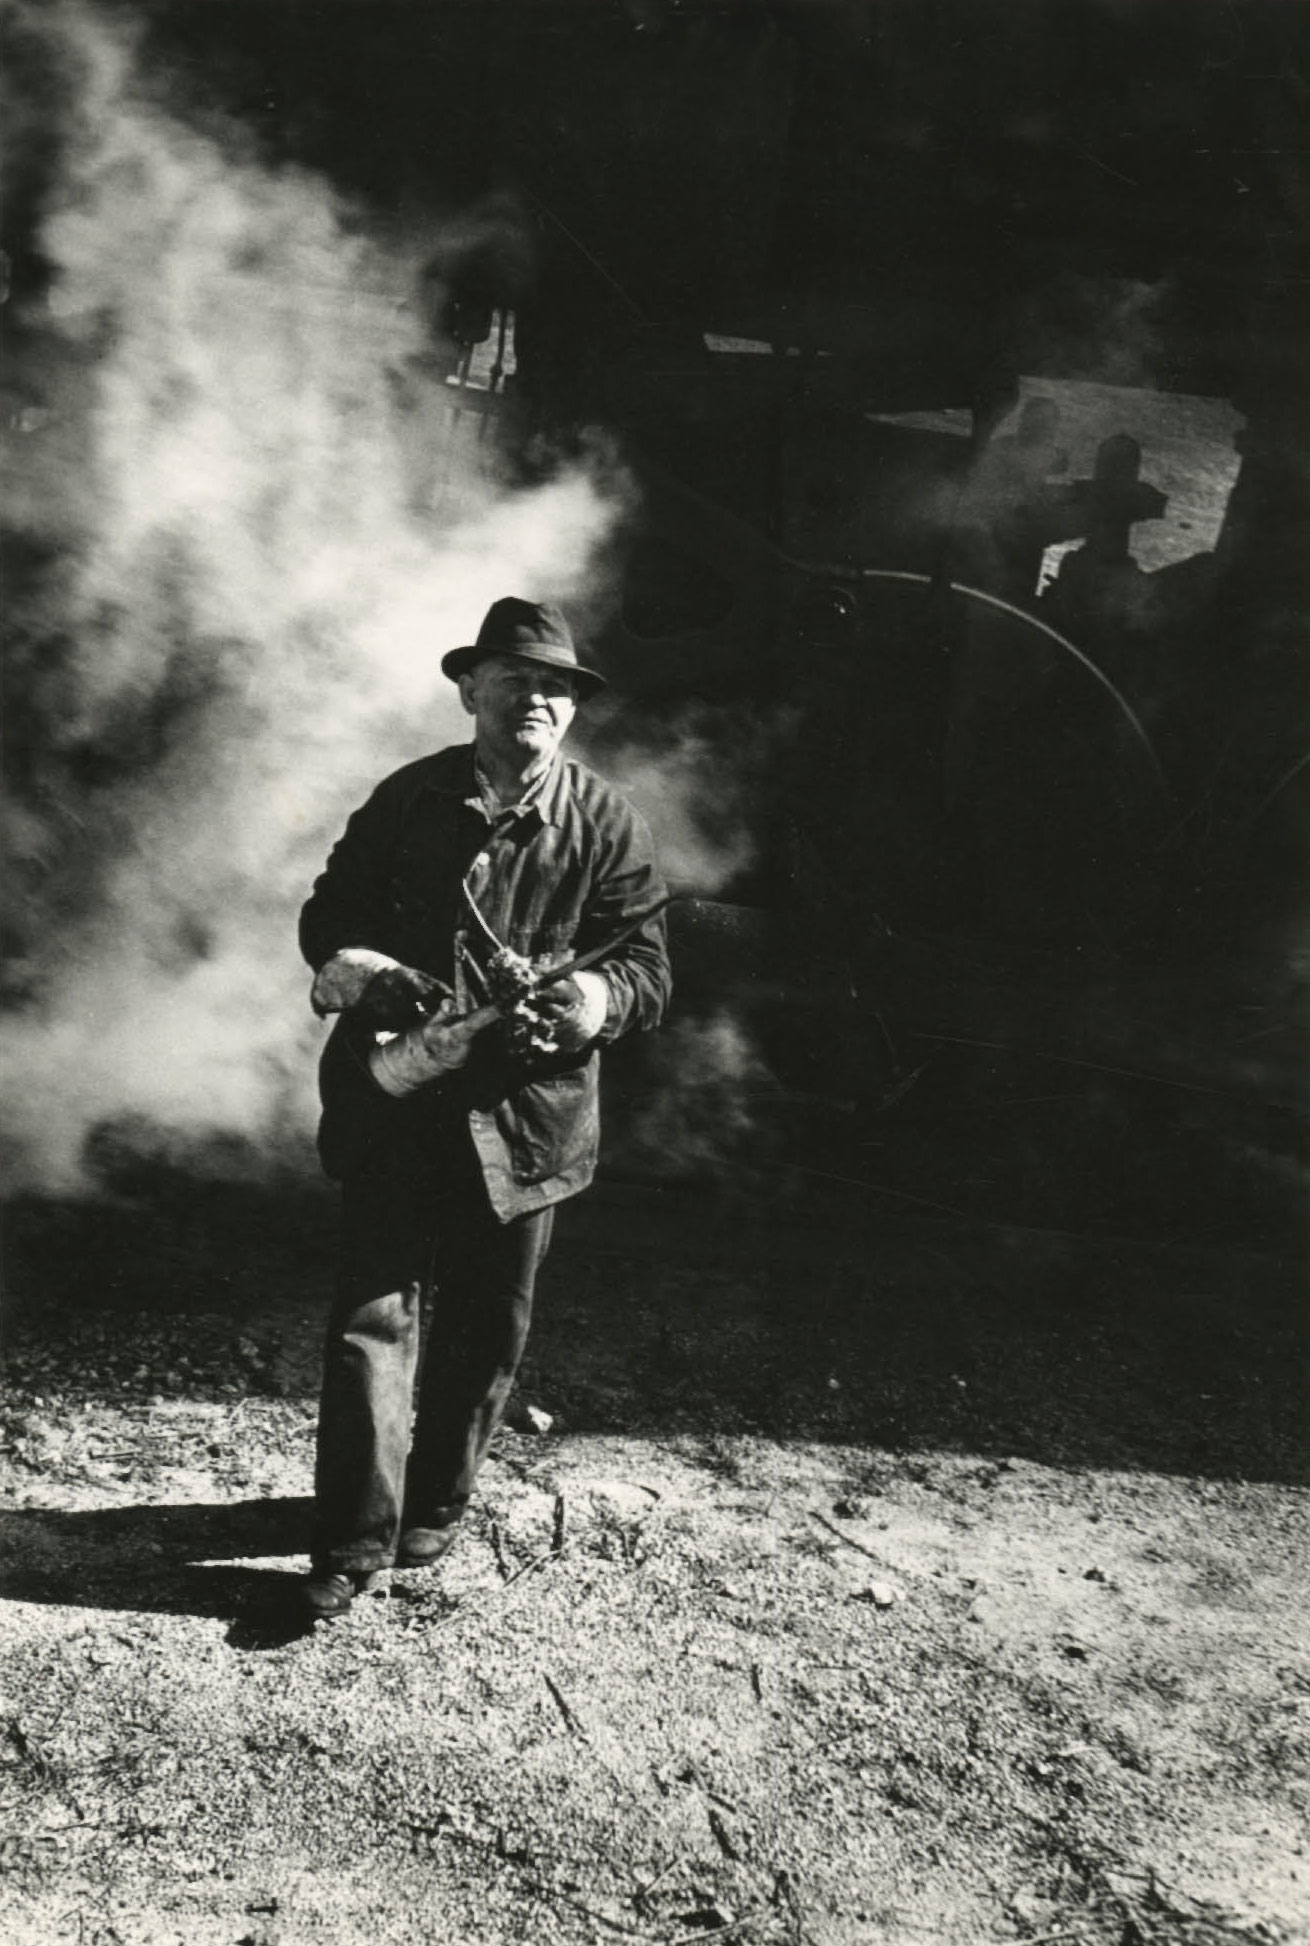 Railroad Worker, Birmingham, AL. 1937